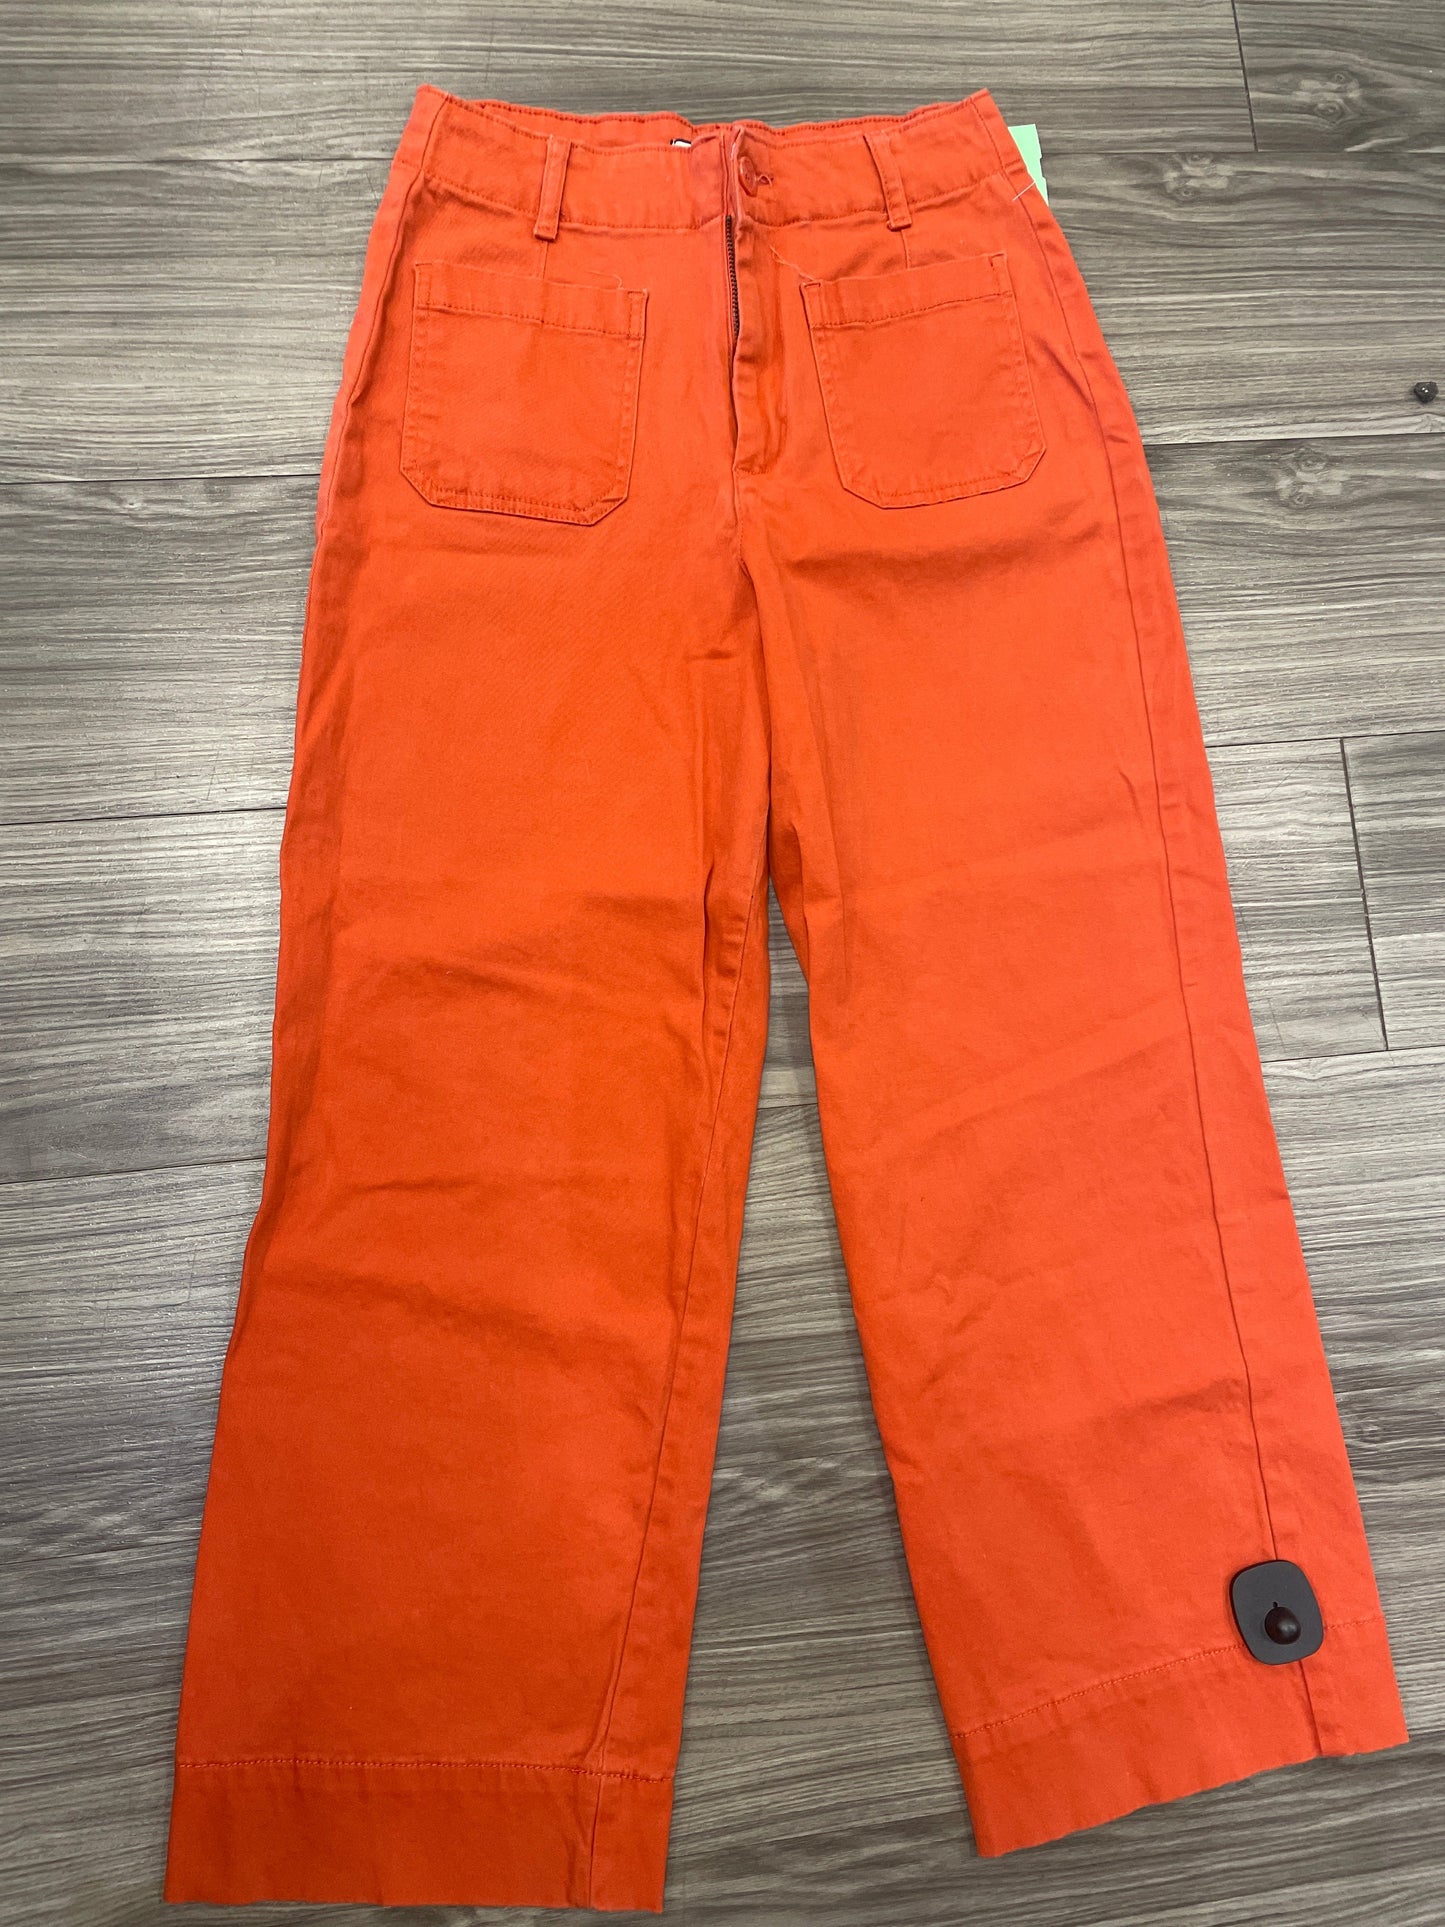 Orange Pants Cropped Clothes Mentor, Size 8